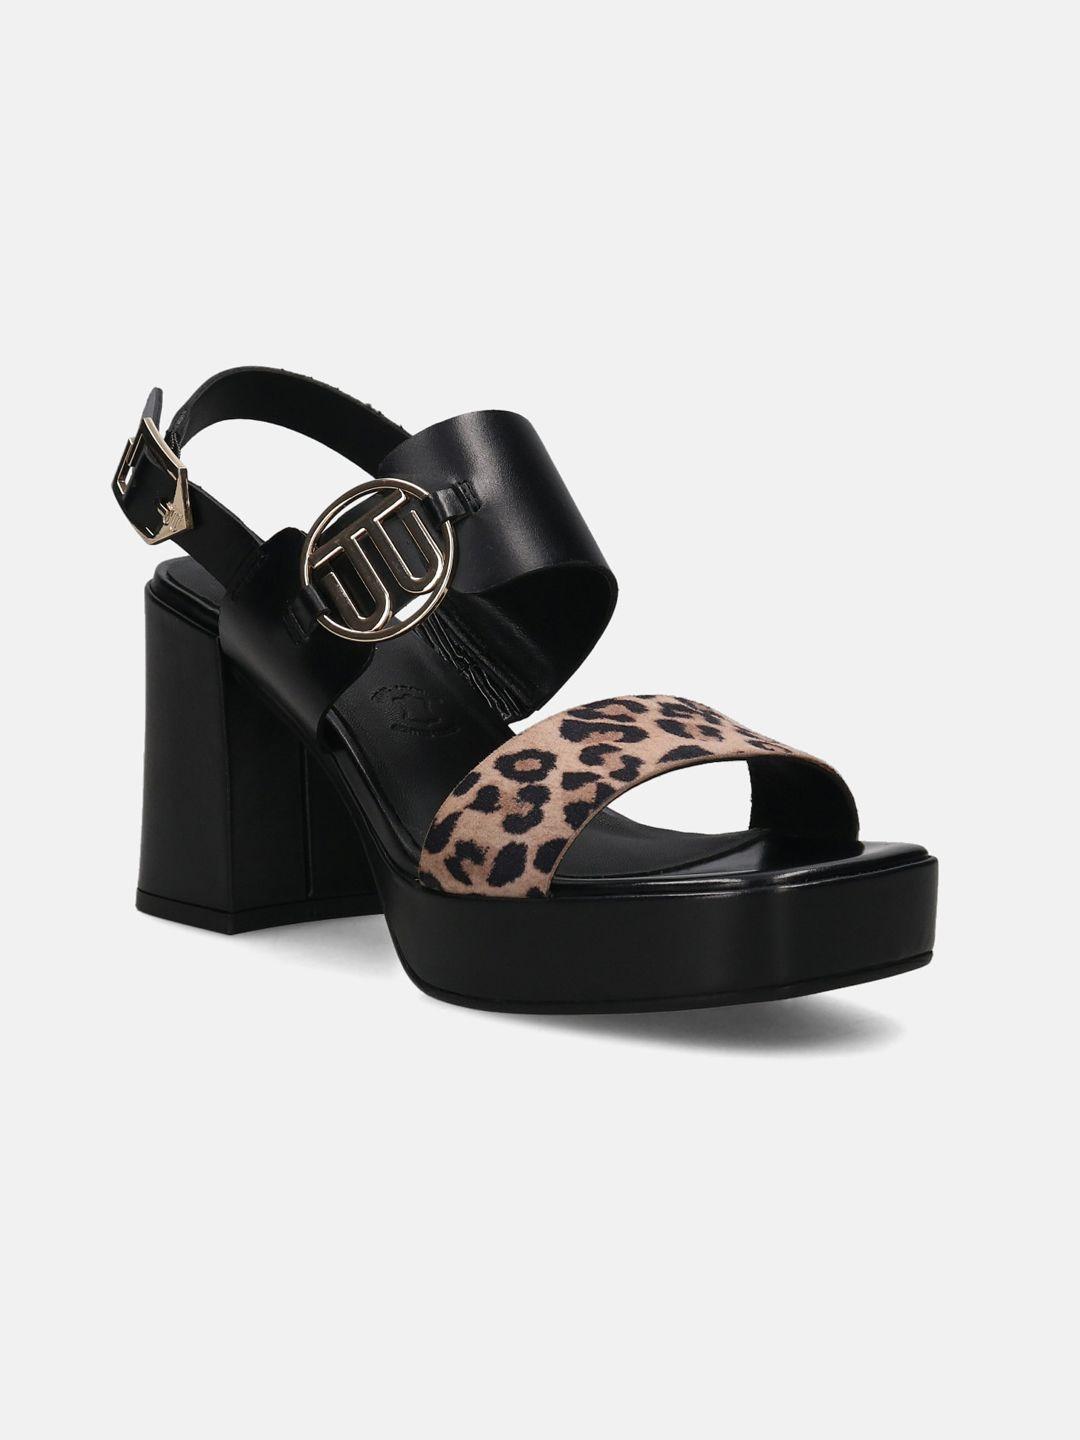 bagatt cesena two strap printed embellished leather platform heels with buckles